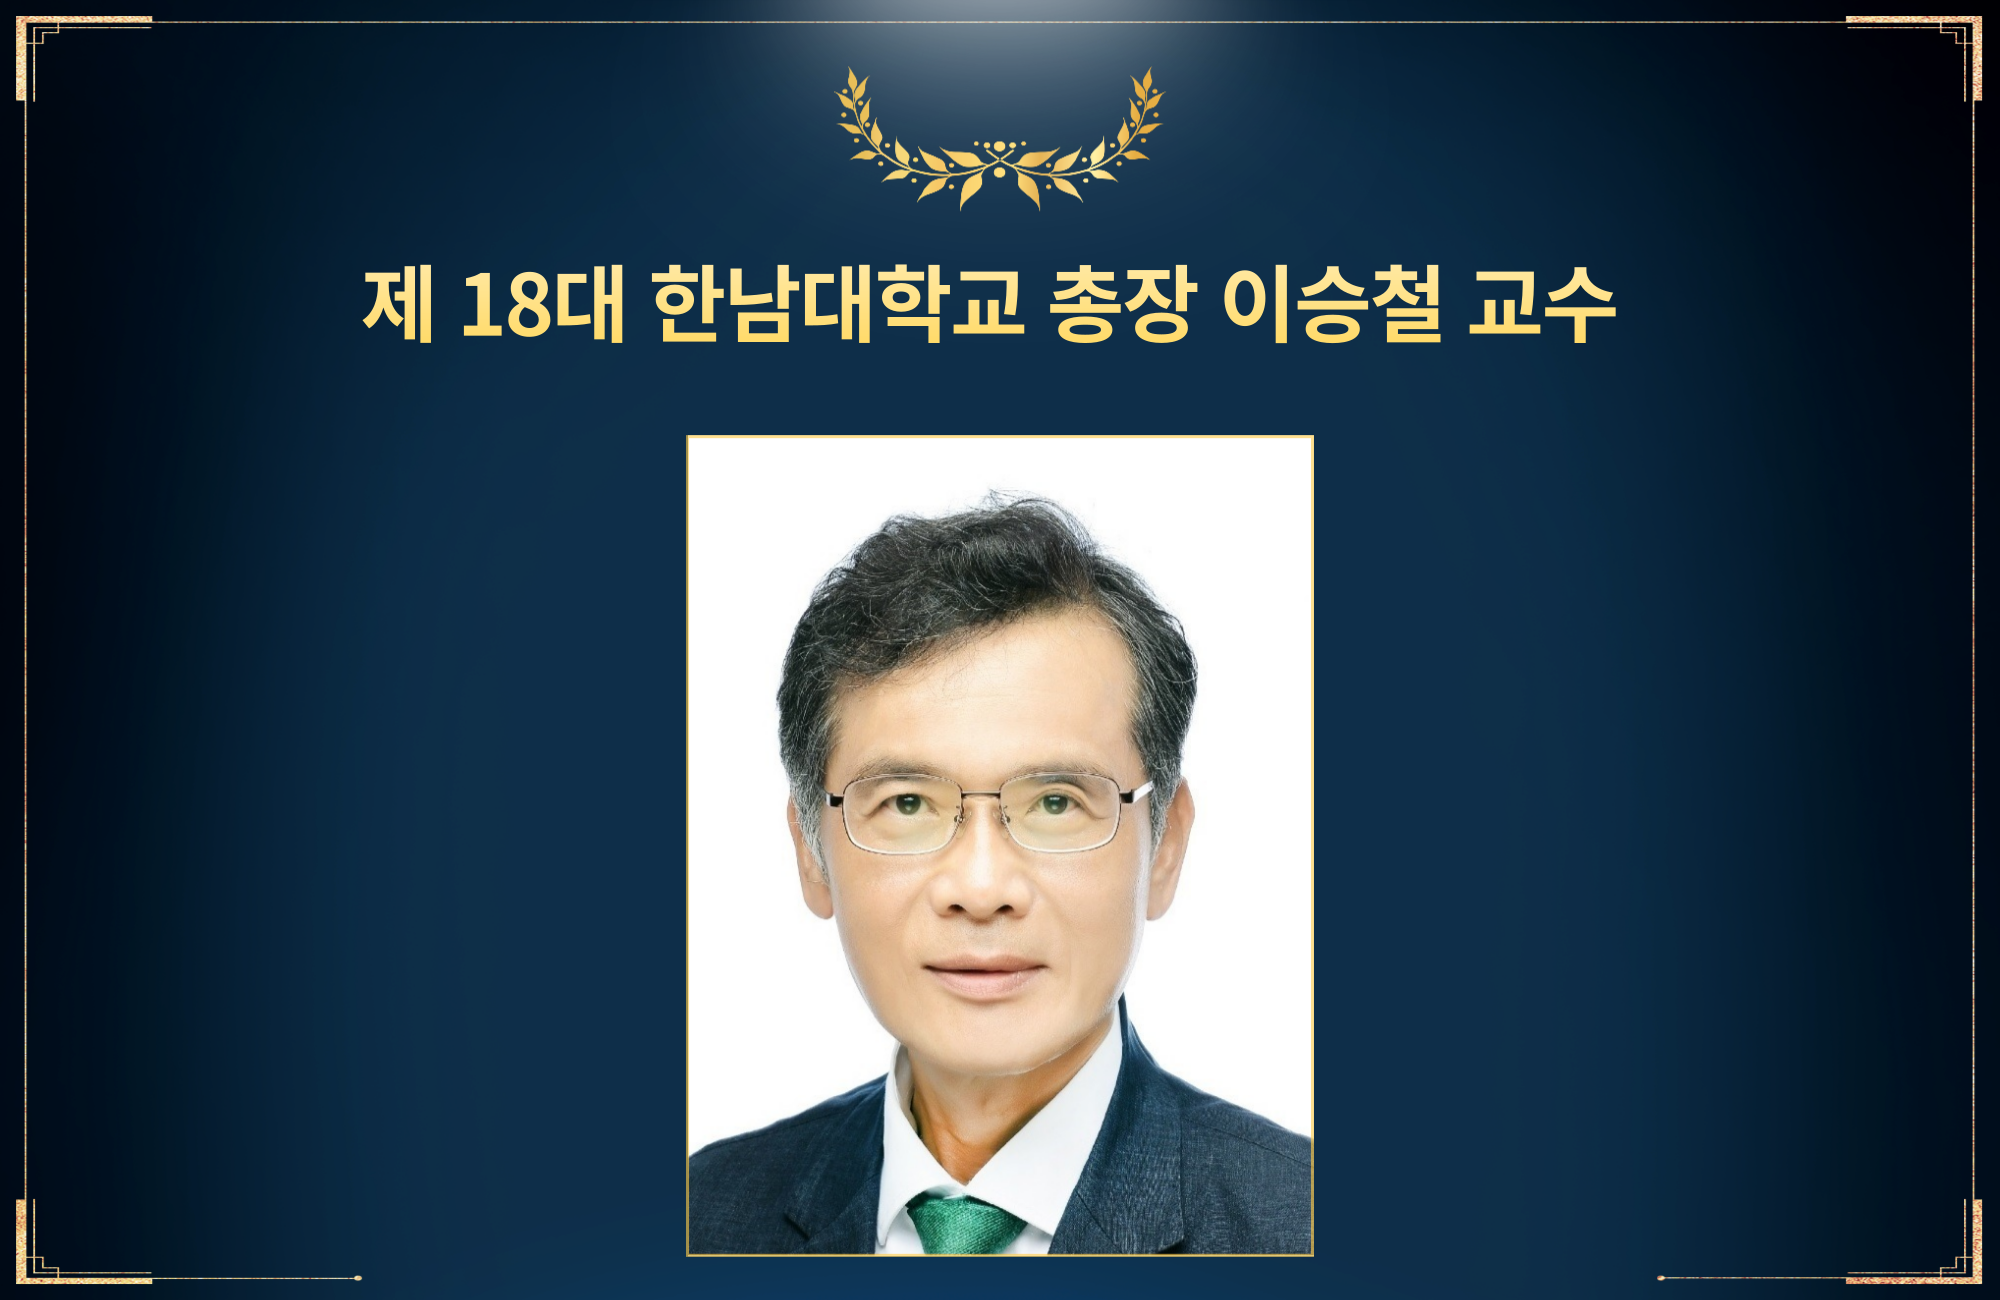 Hannam University elects Seung-Chul Lee, Professor Emeritus, as the 18th President.